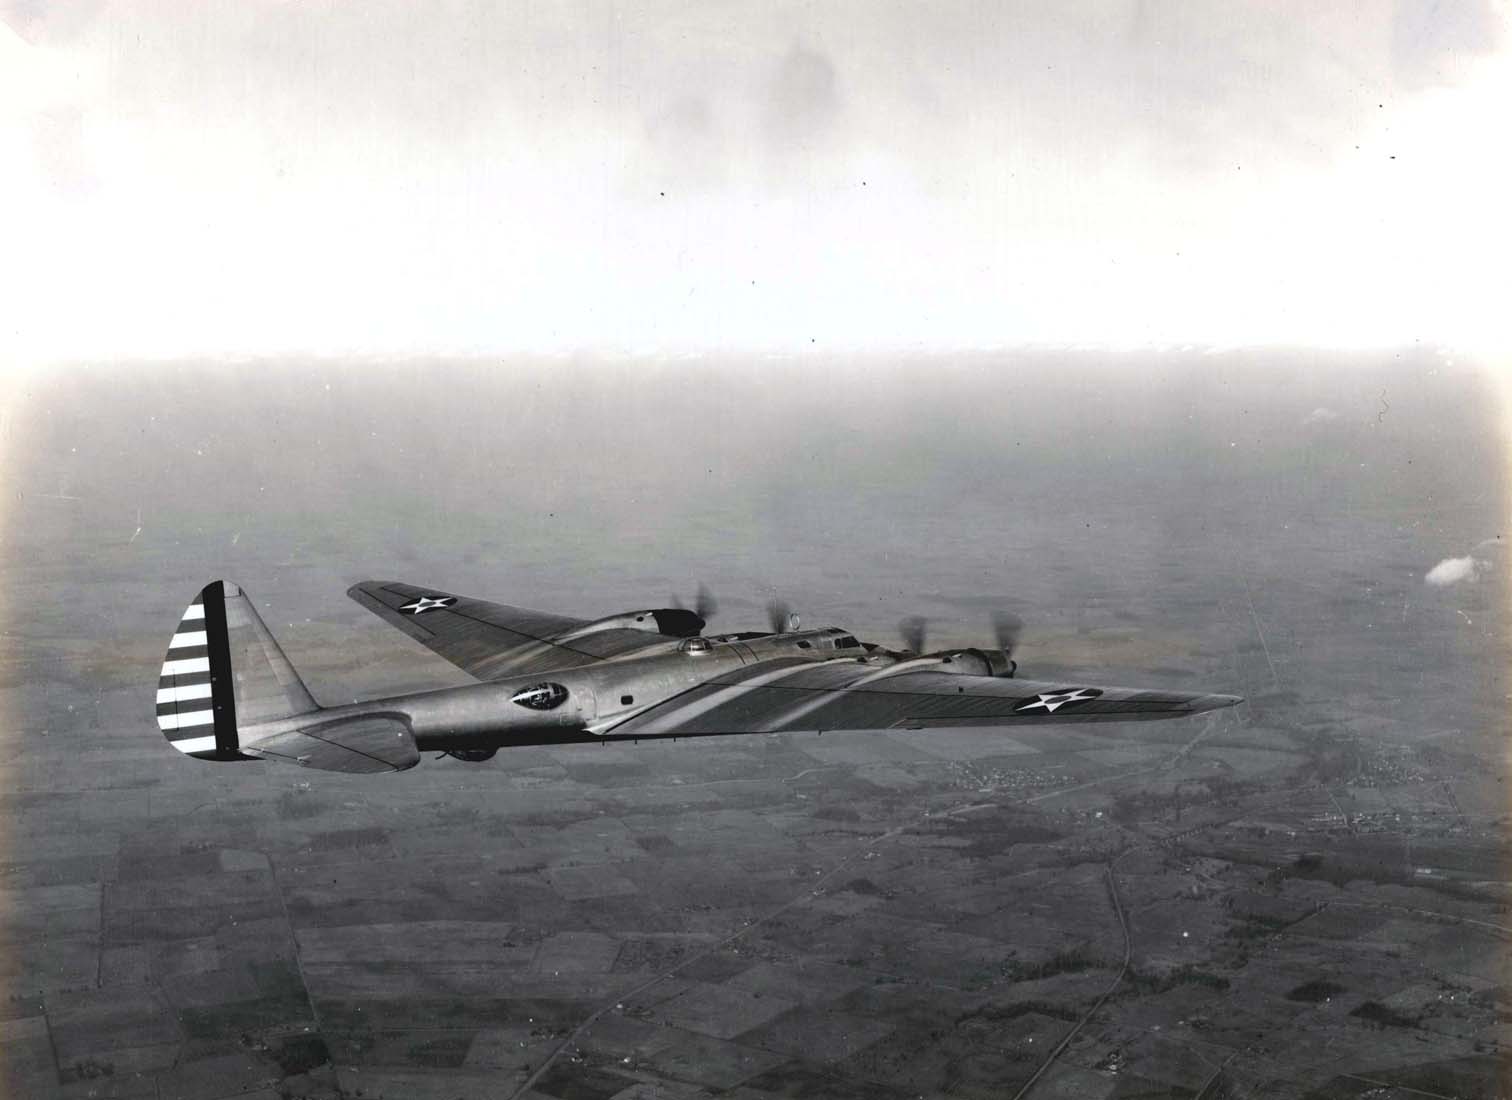 Boeing XB-15 35-277. (U.S. Air Force)